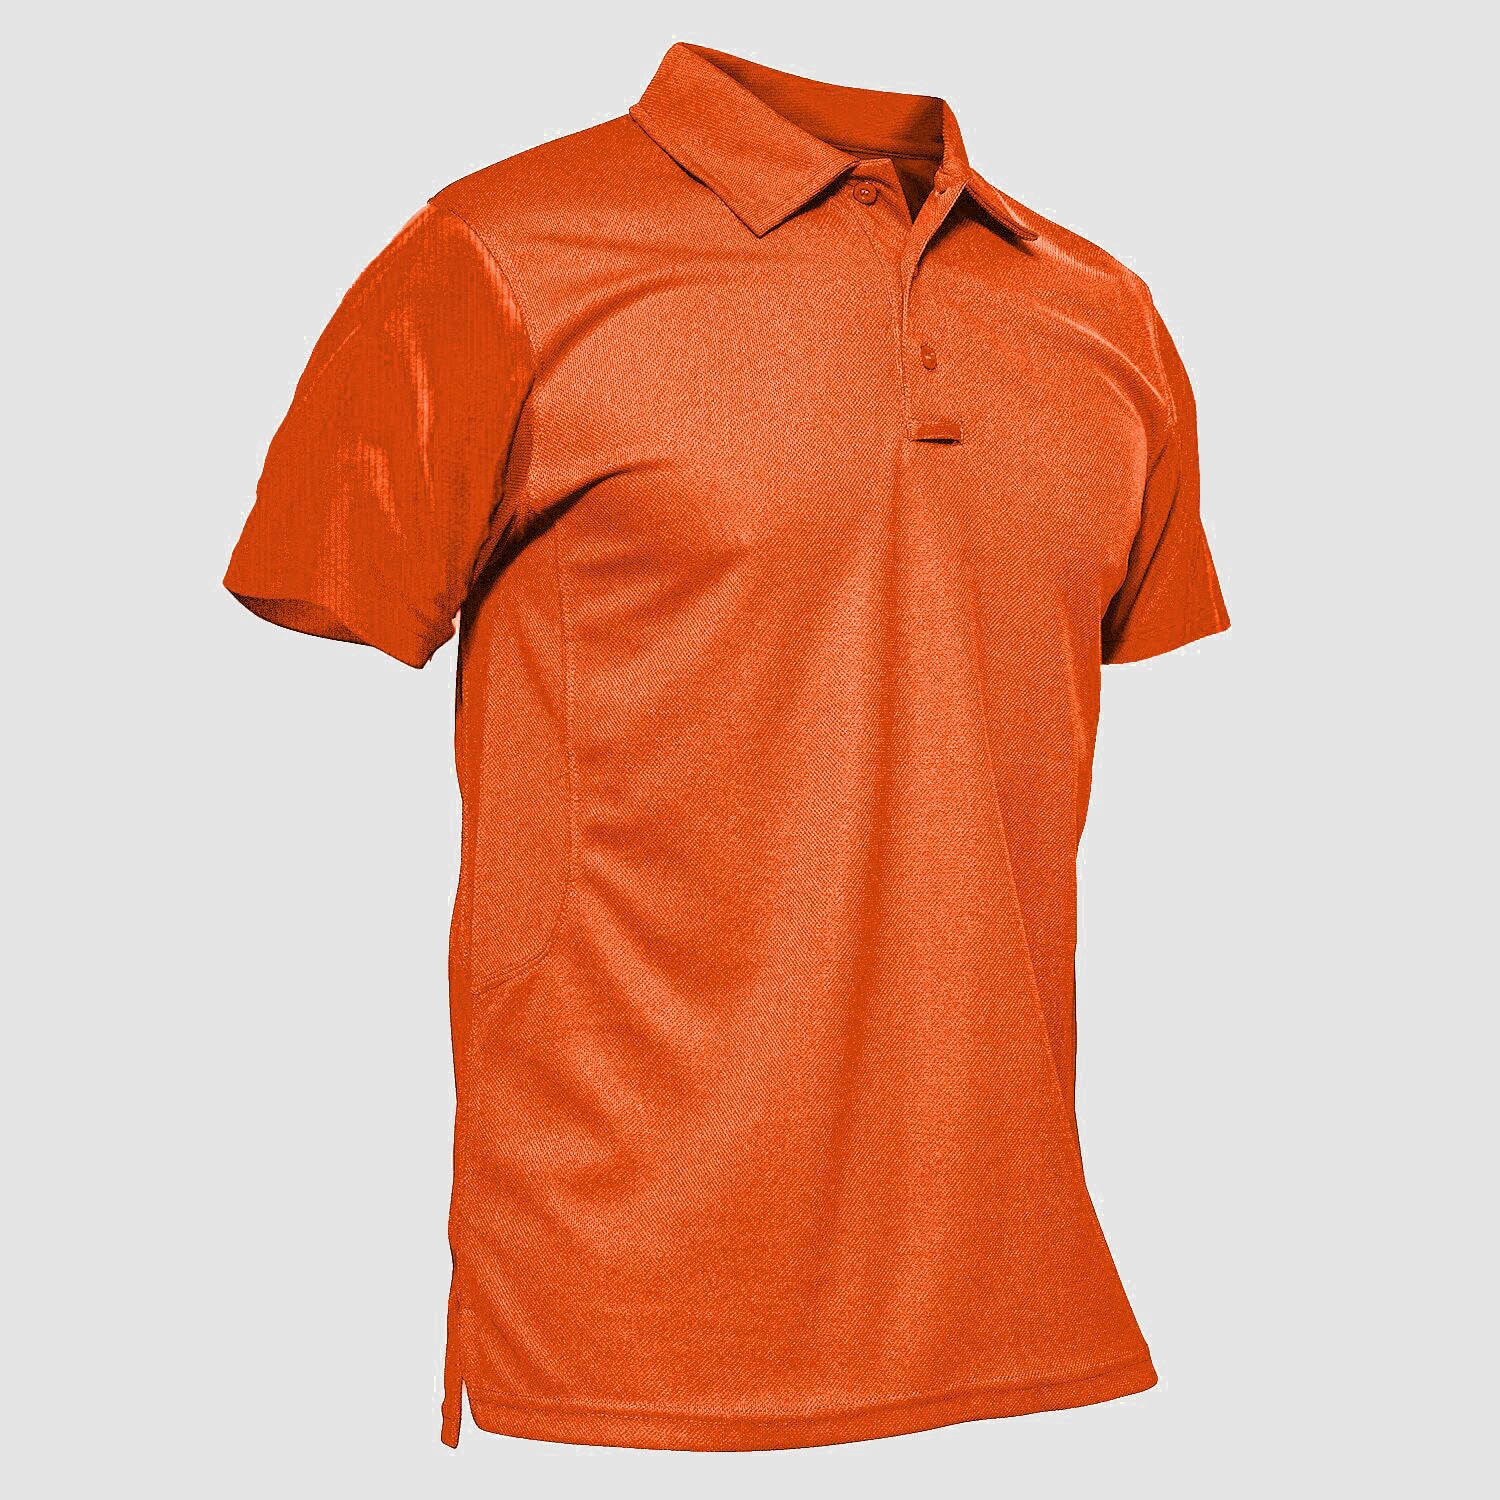 Mens Fishing Hiking Shirts with Detachable Sleeves Long/Short Sleeve Q –  MAGCOMSEN